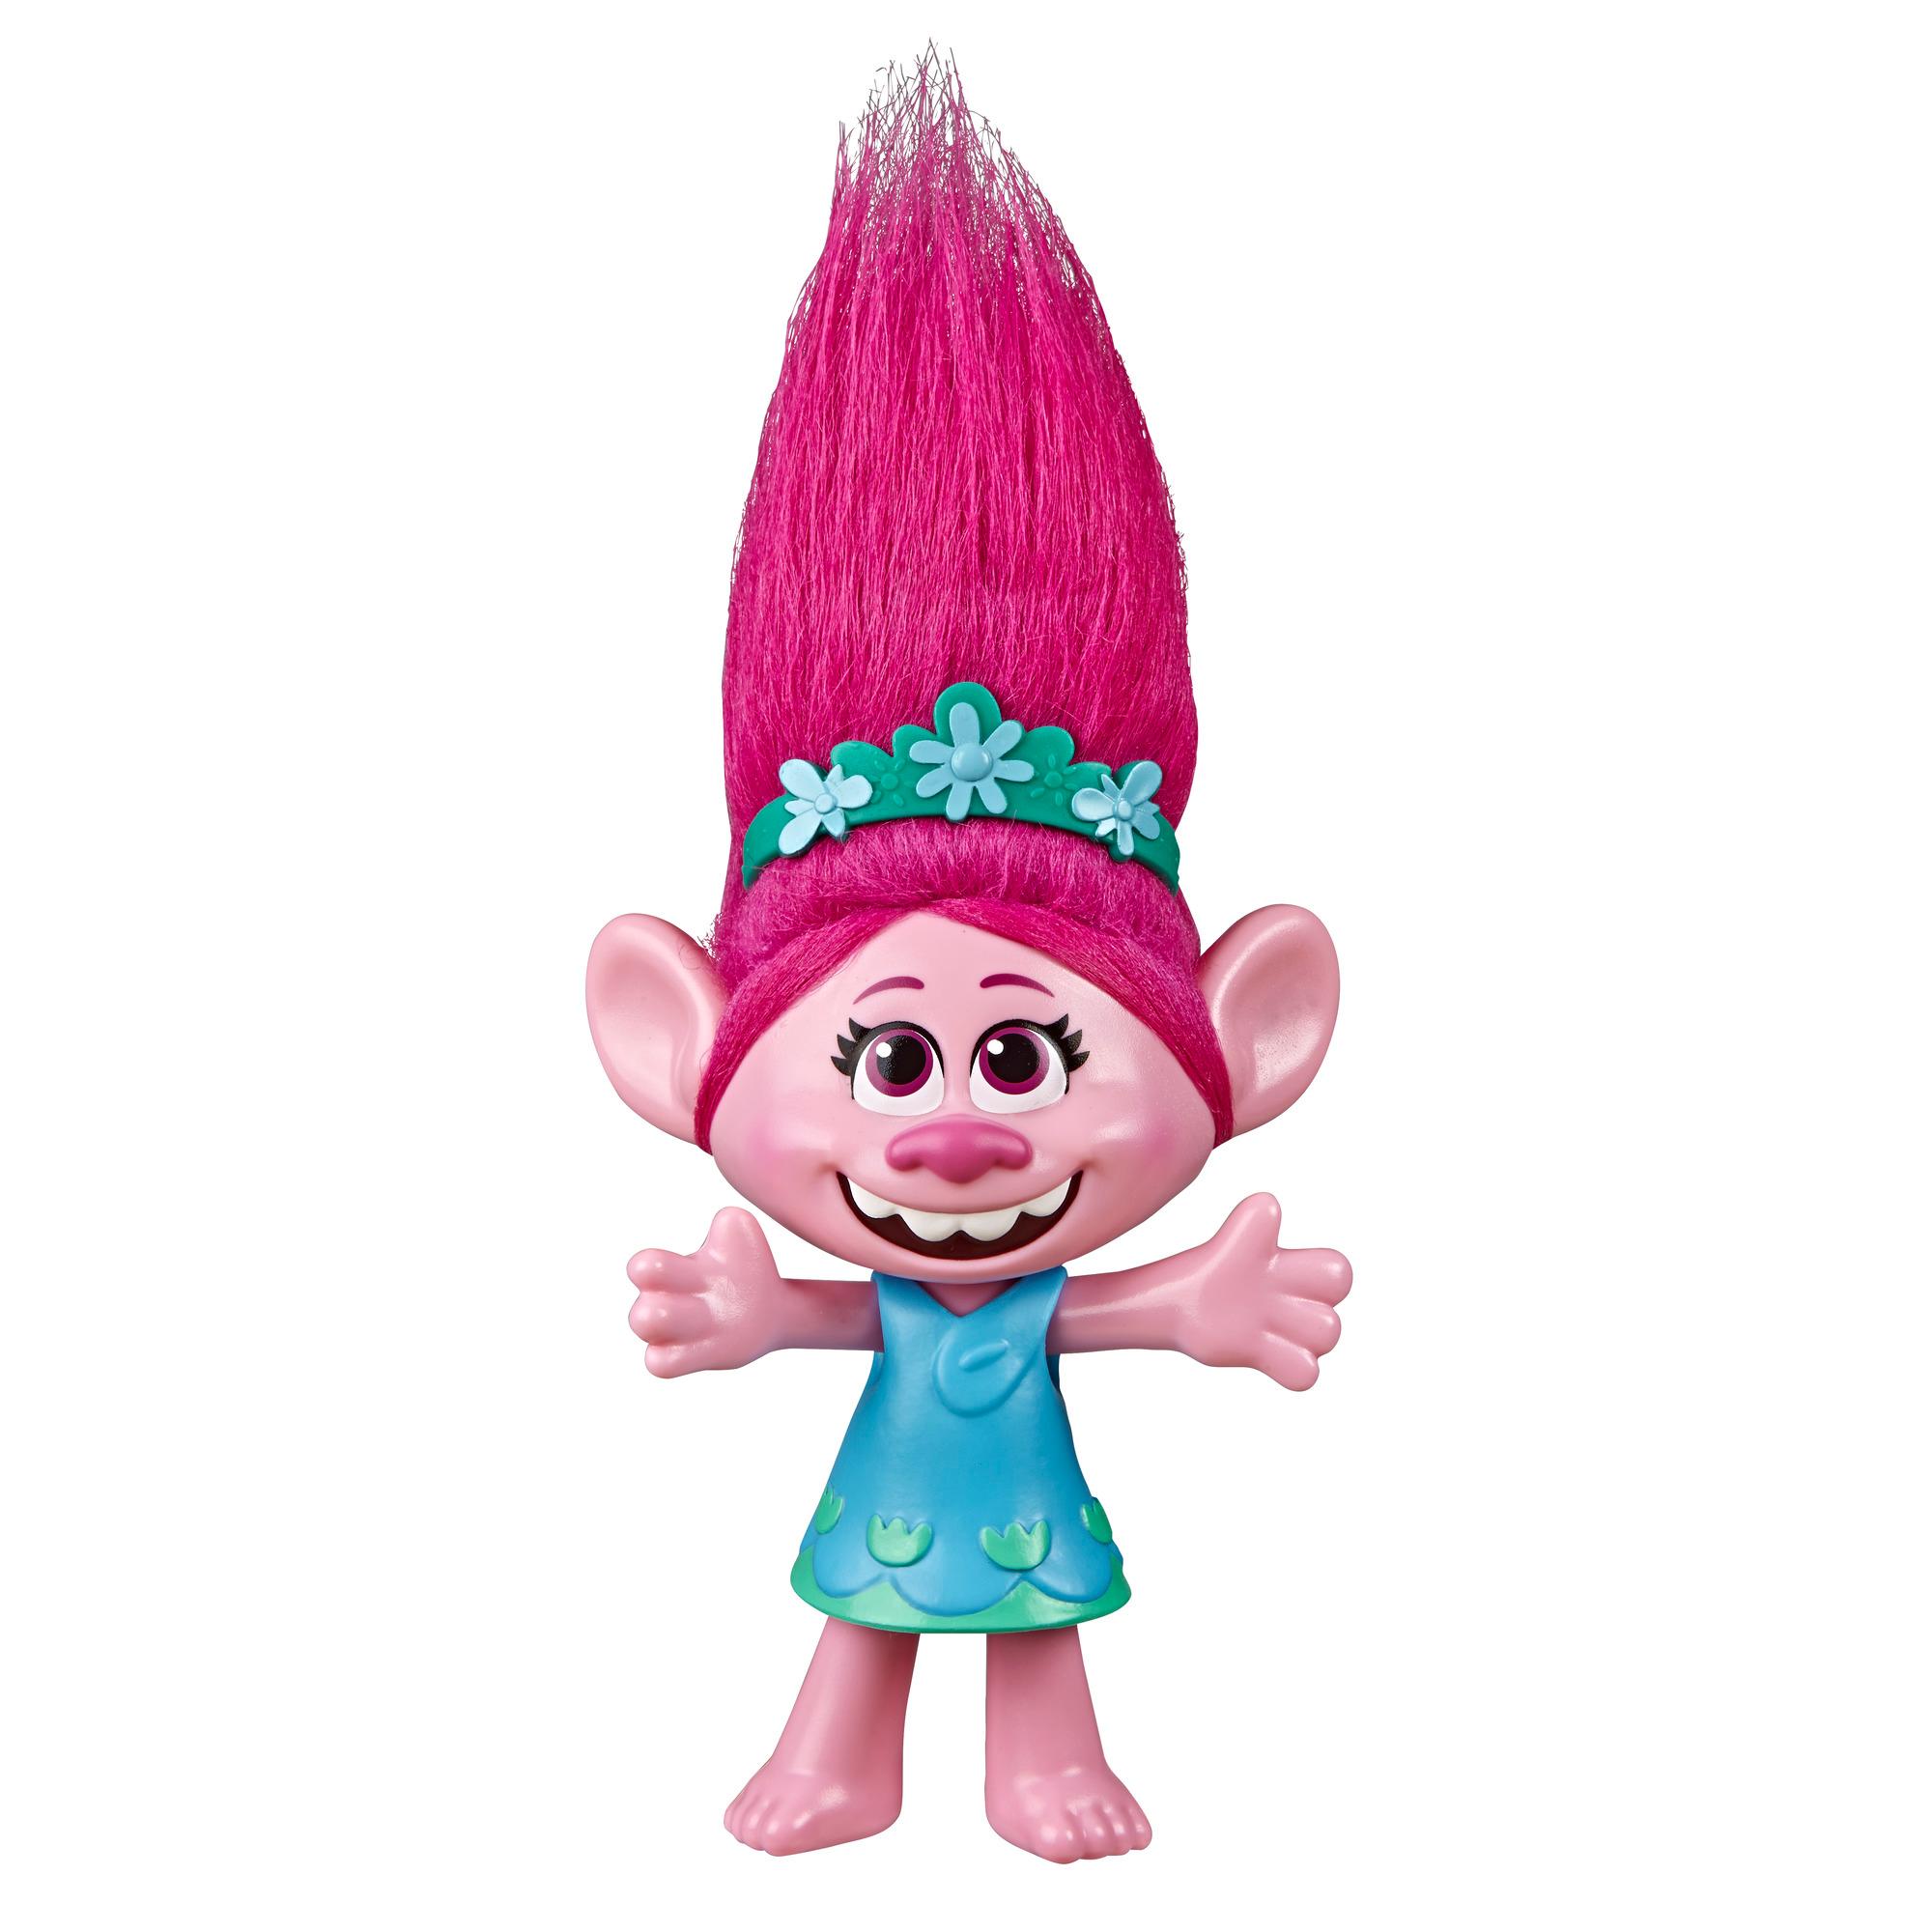 DreamWorks Trolls - Poppy Cantante pop - Figura que canta Trolls Just Want to Have Fun de la película Trolls: World Tour de DreamWorks